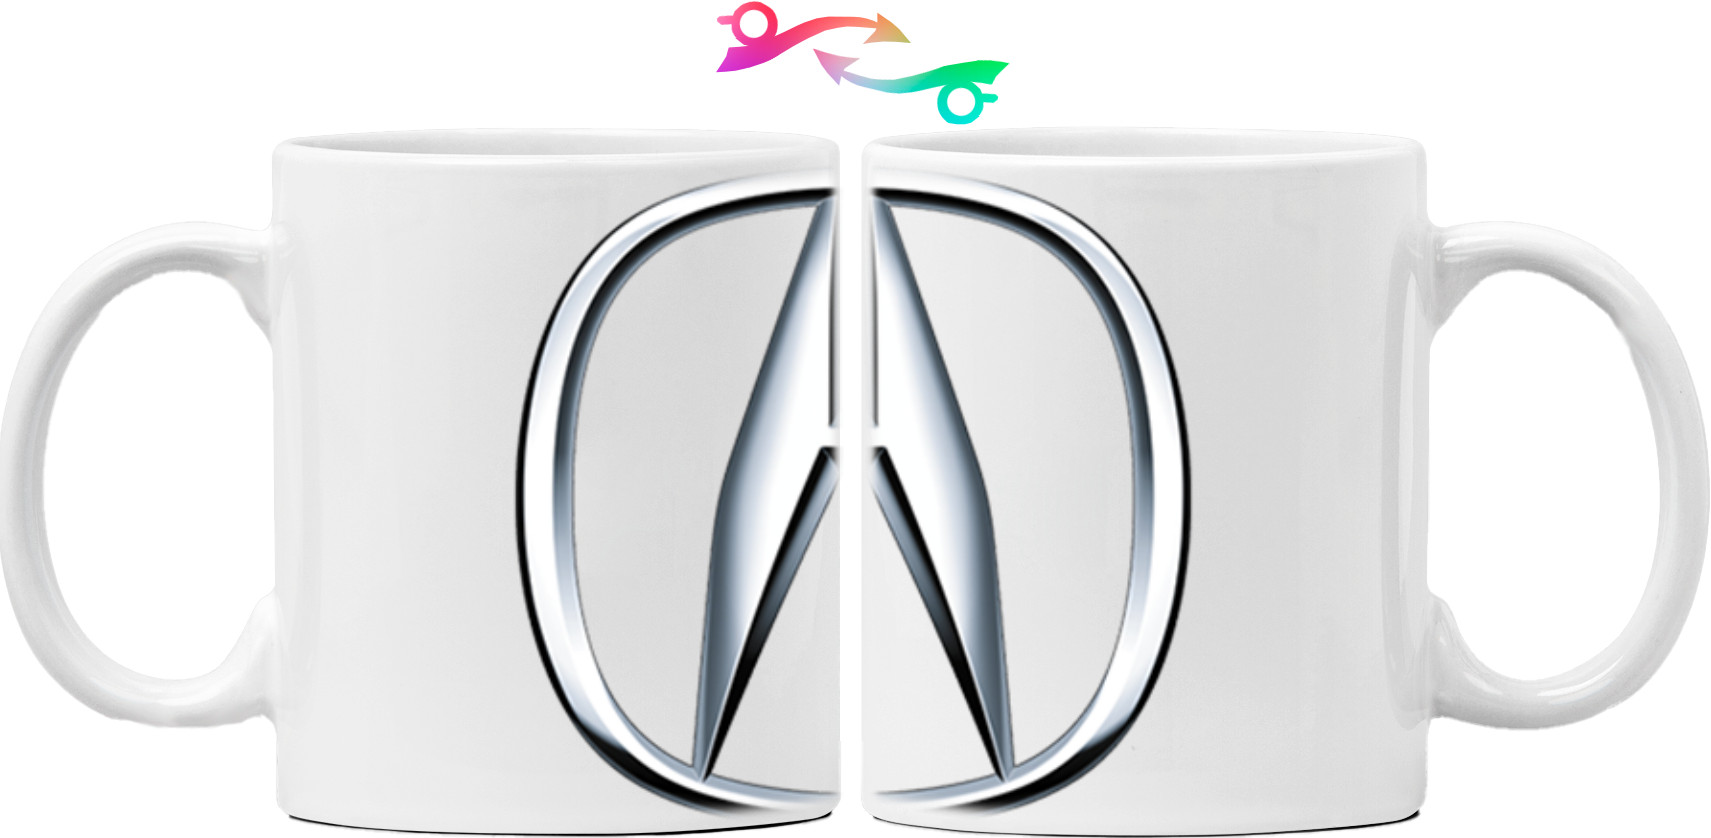 Acura emblem